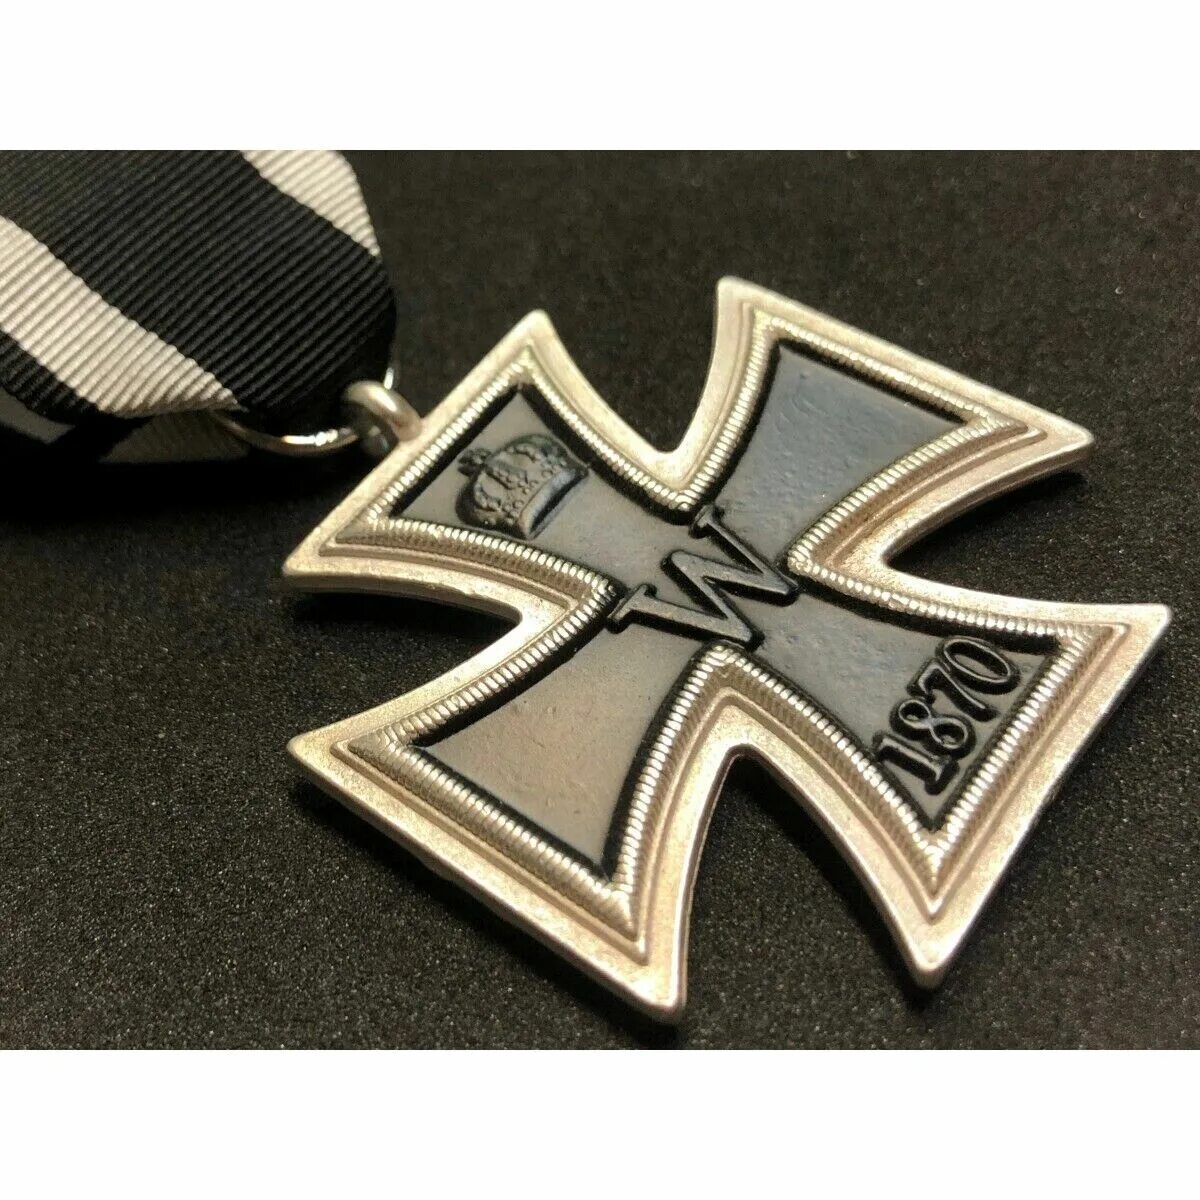 Iron Cross 2nd class. Немецкий крест Кройц. Немецкий крест Балкенкройц. Пряжка Iron Cross.